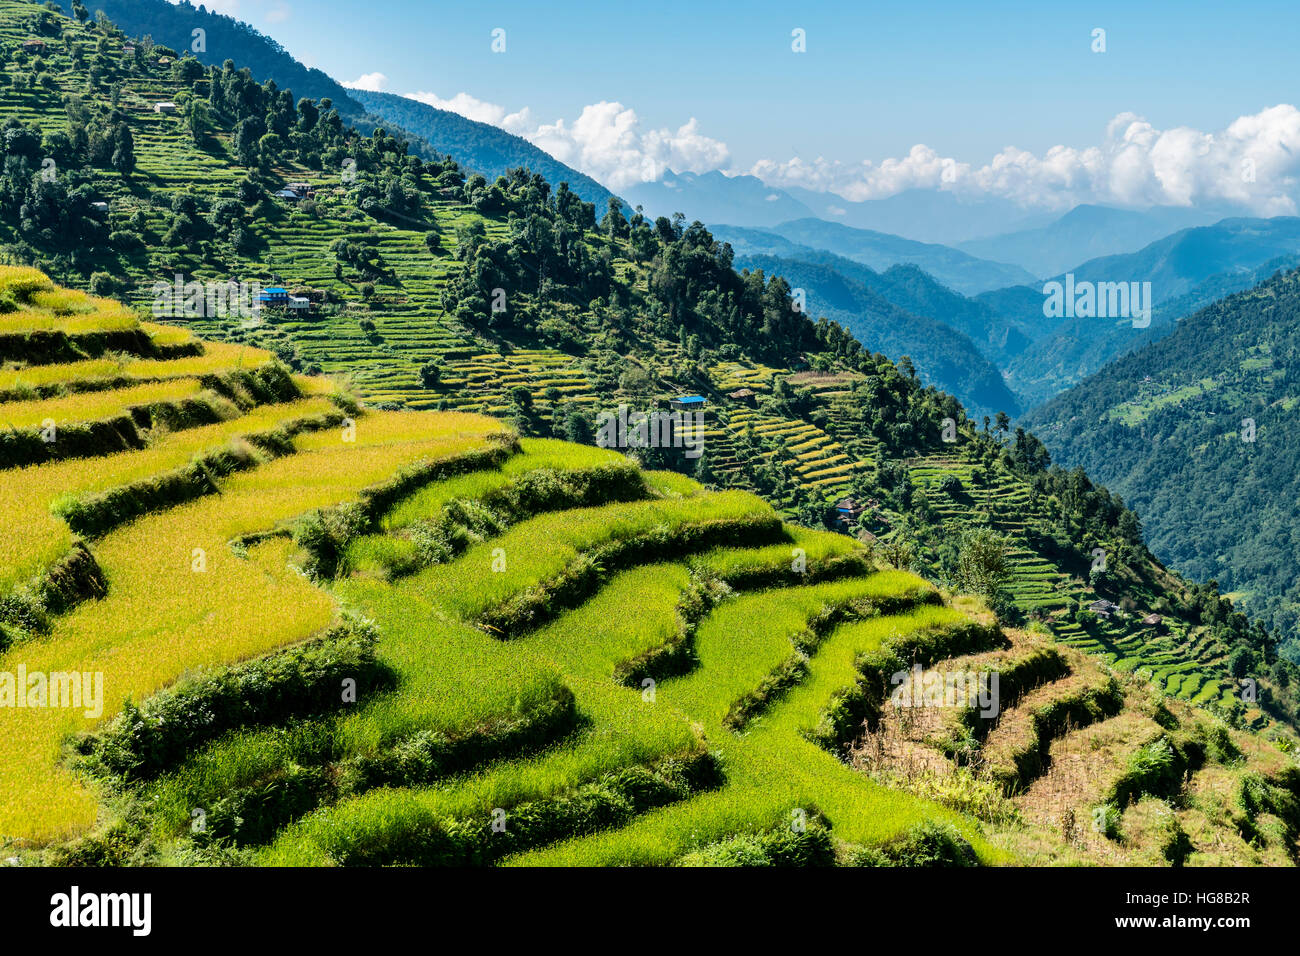 Agricultural landscape, green rice terraces and barley fields in Upper Modi Khola valley, Landruk, Kaski District, Nepal Stock Photo